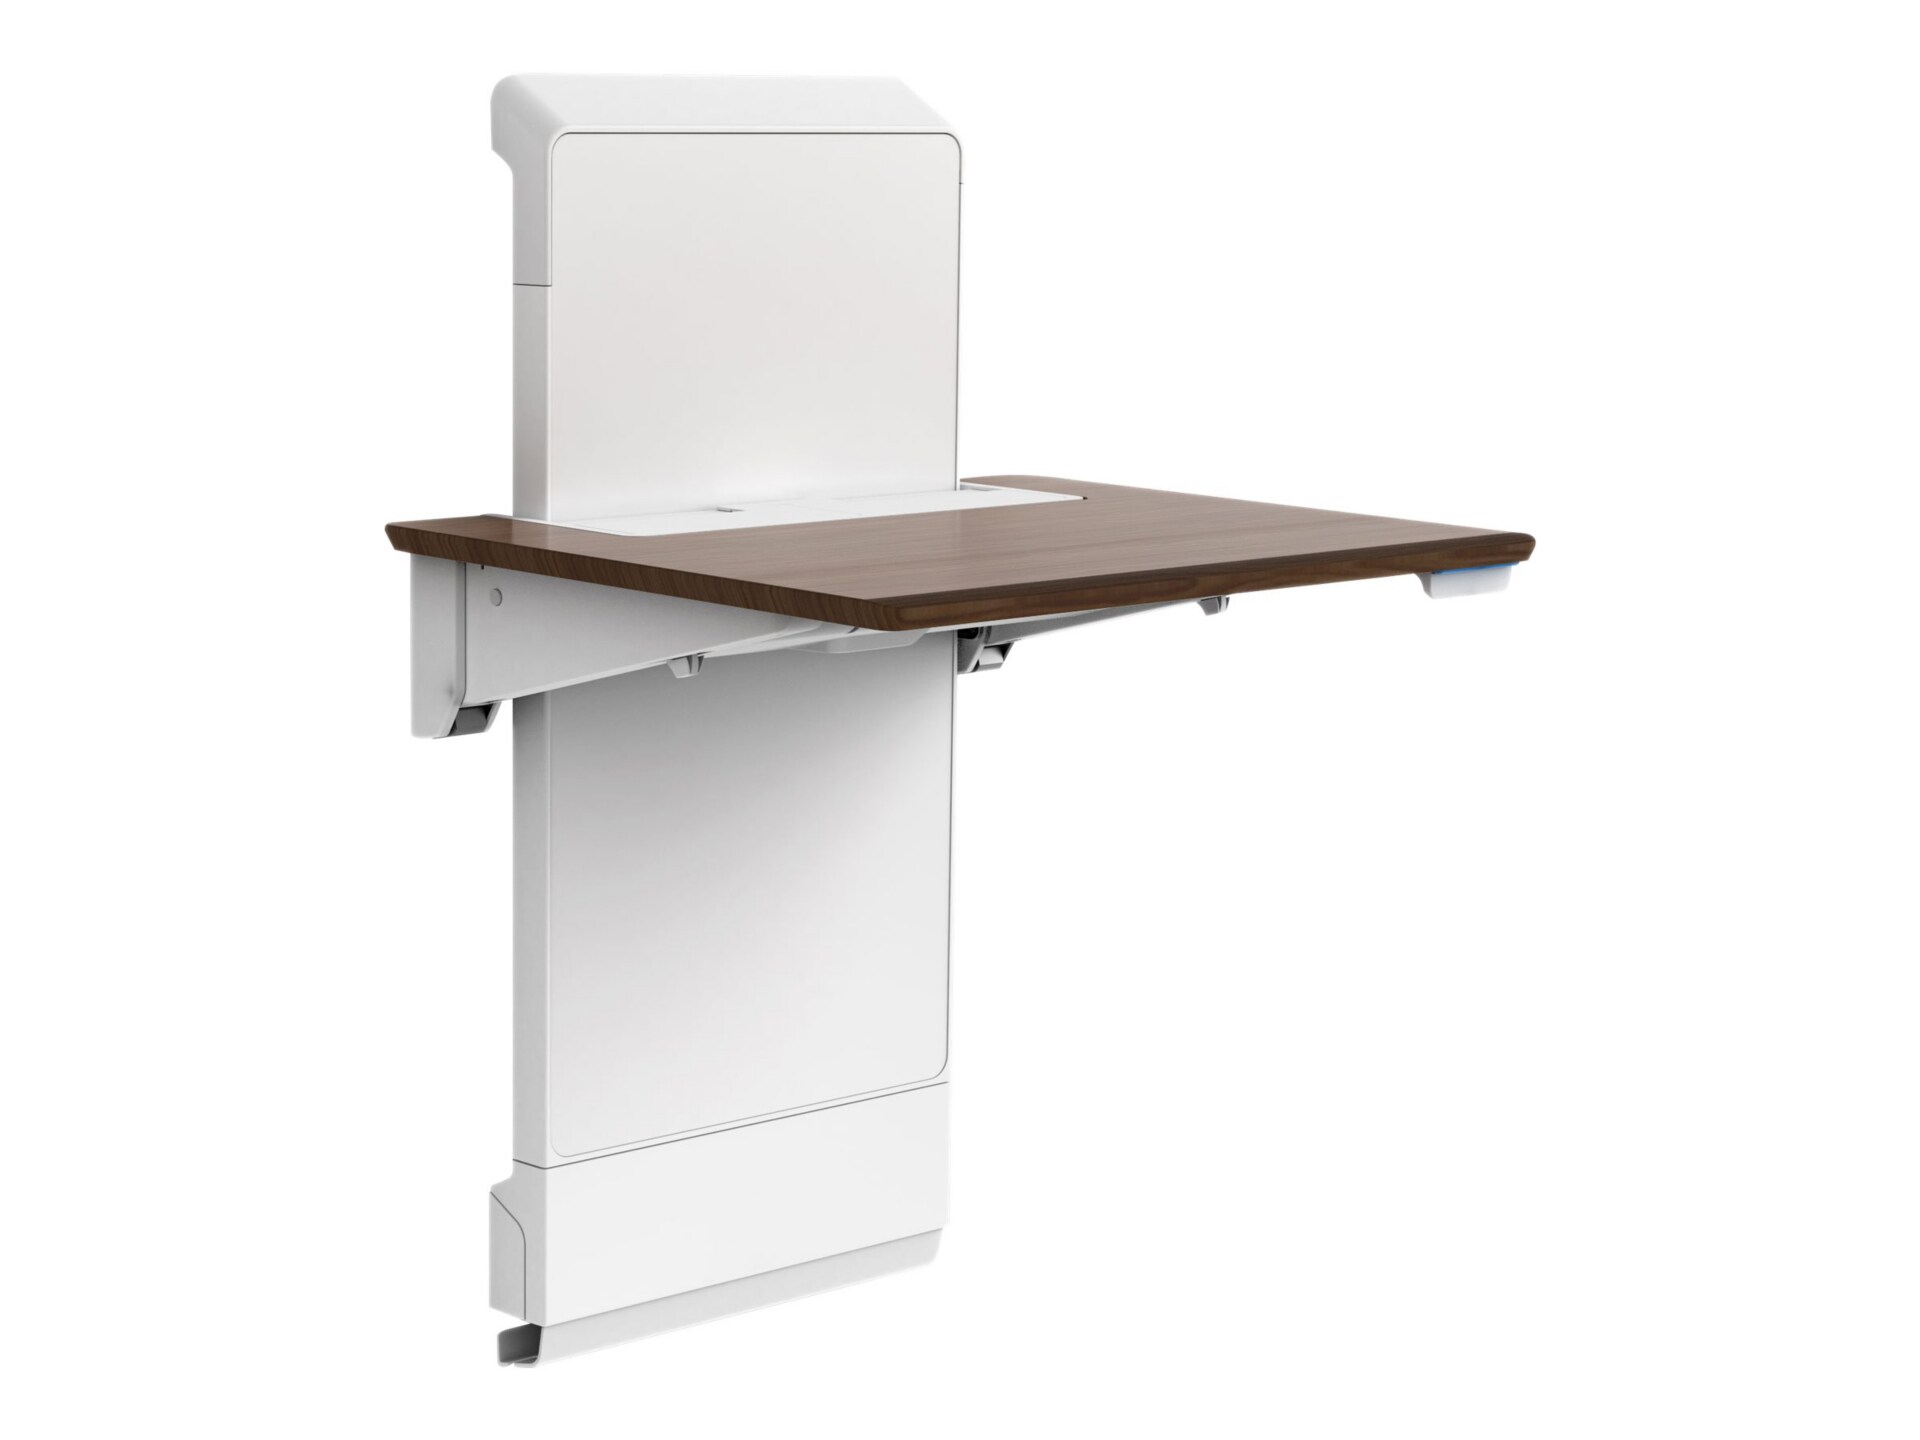 Ergotron WorkFit Elevate Sit-Stand Wall Desk with Power Access - Wallnut Hills